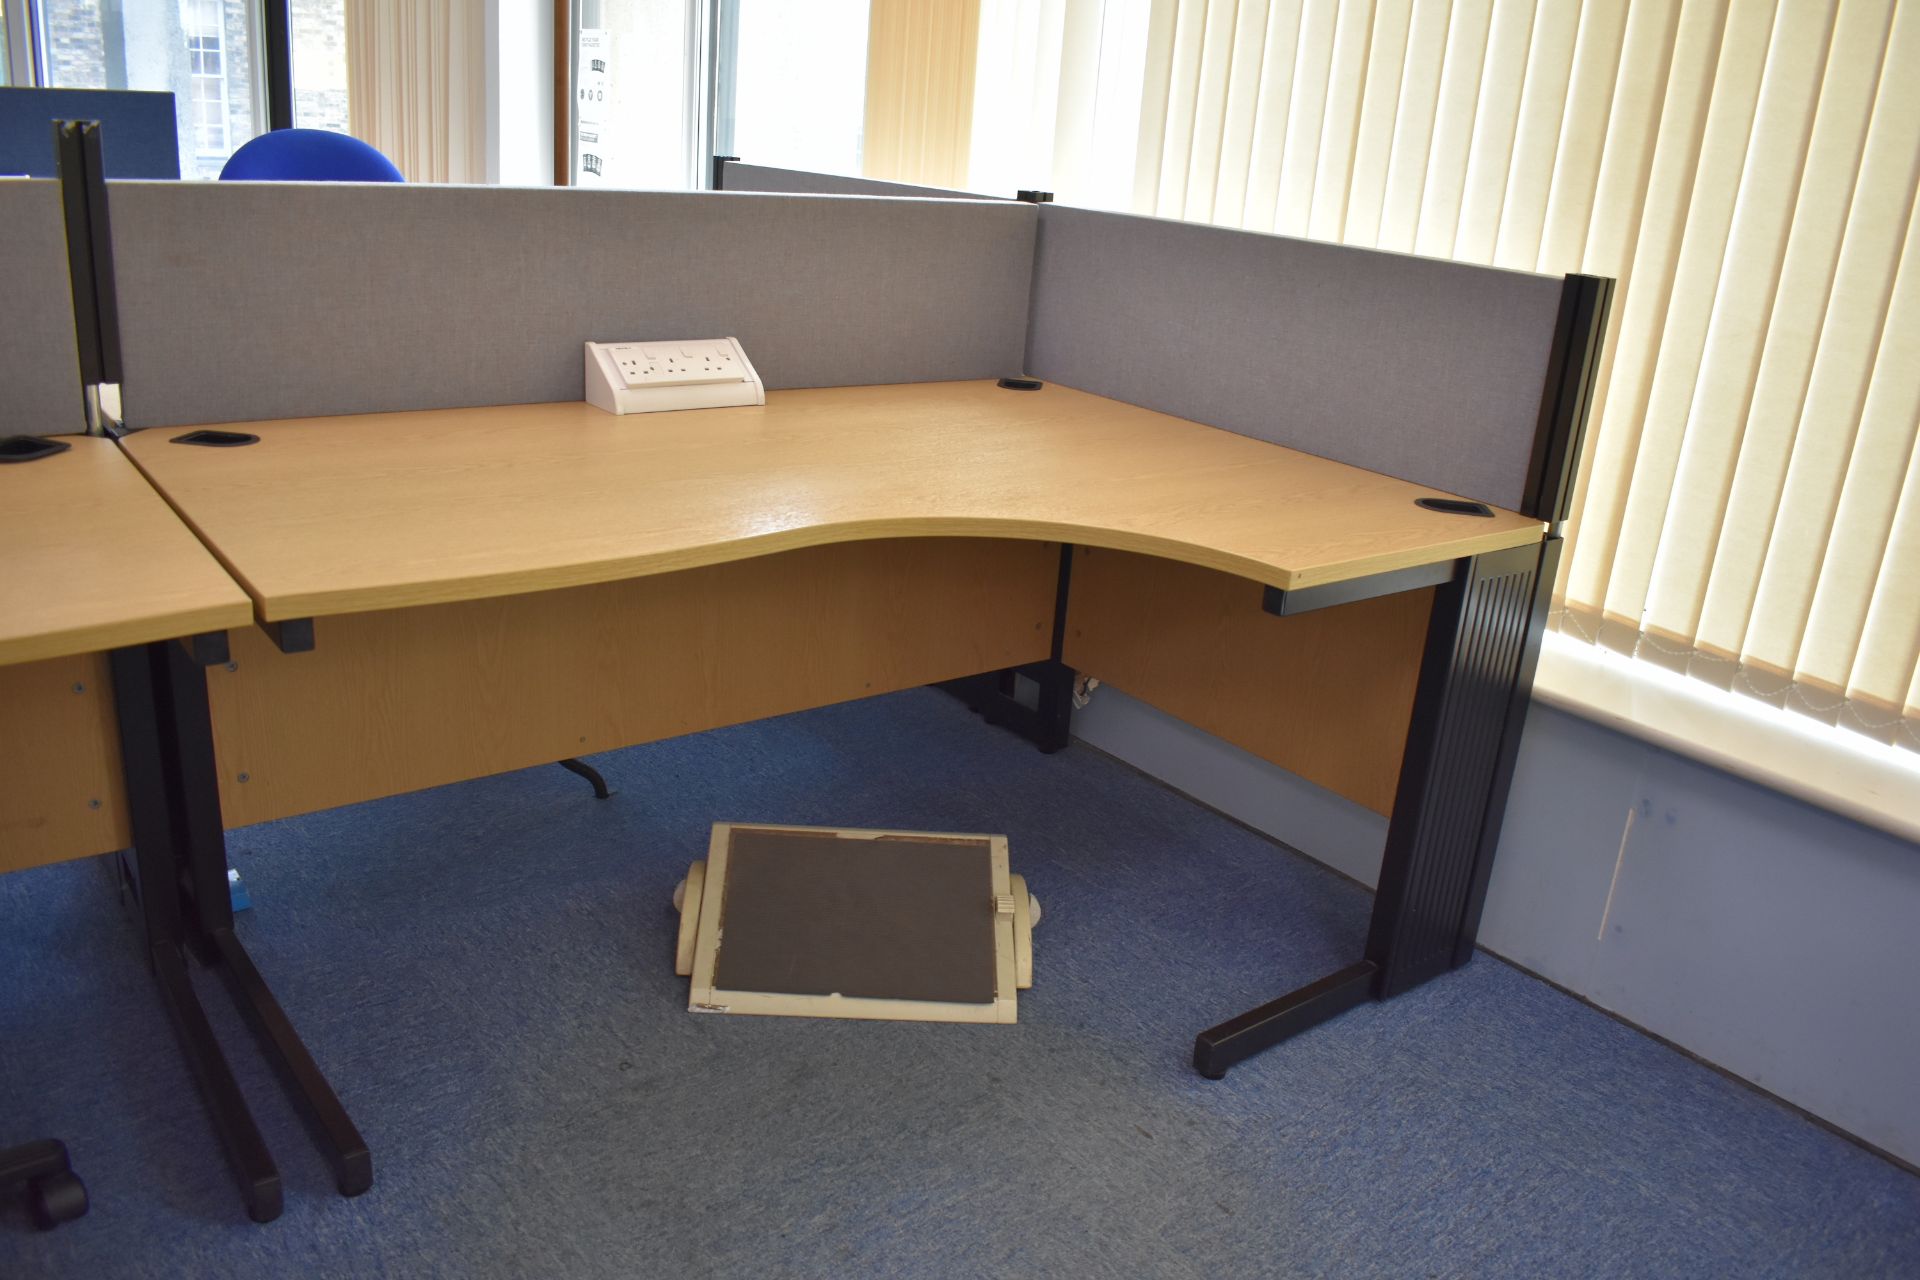 Hard Wired Corner Desks, Desk Screens, Chairs, Footrest, Coat Stand - Image 17 of 17